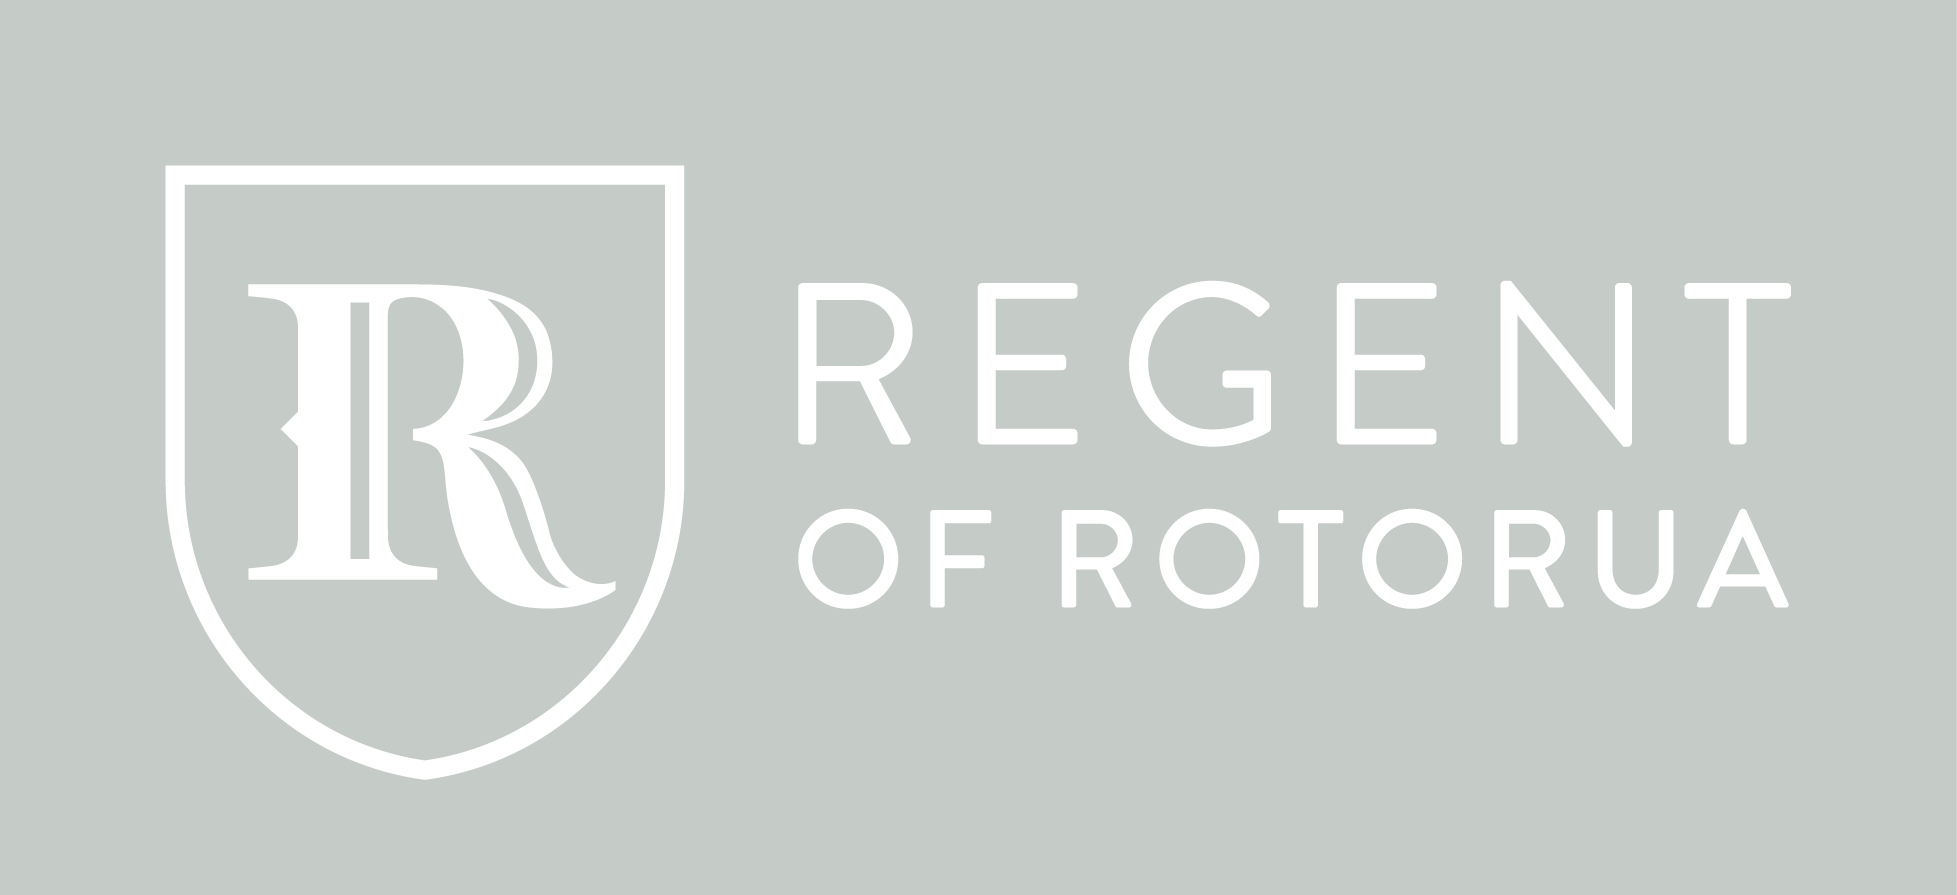 
Regent of Rotorua